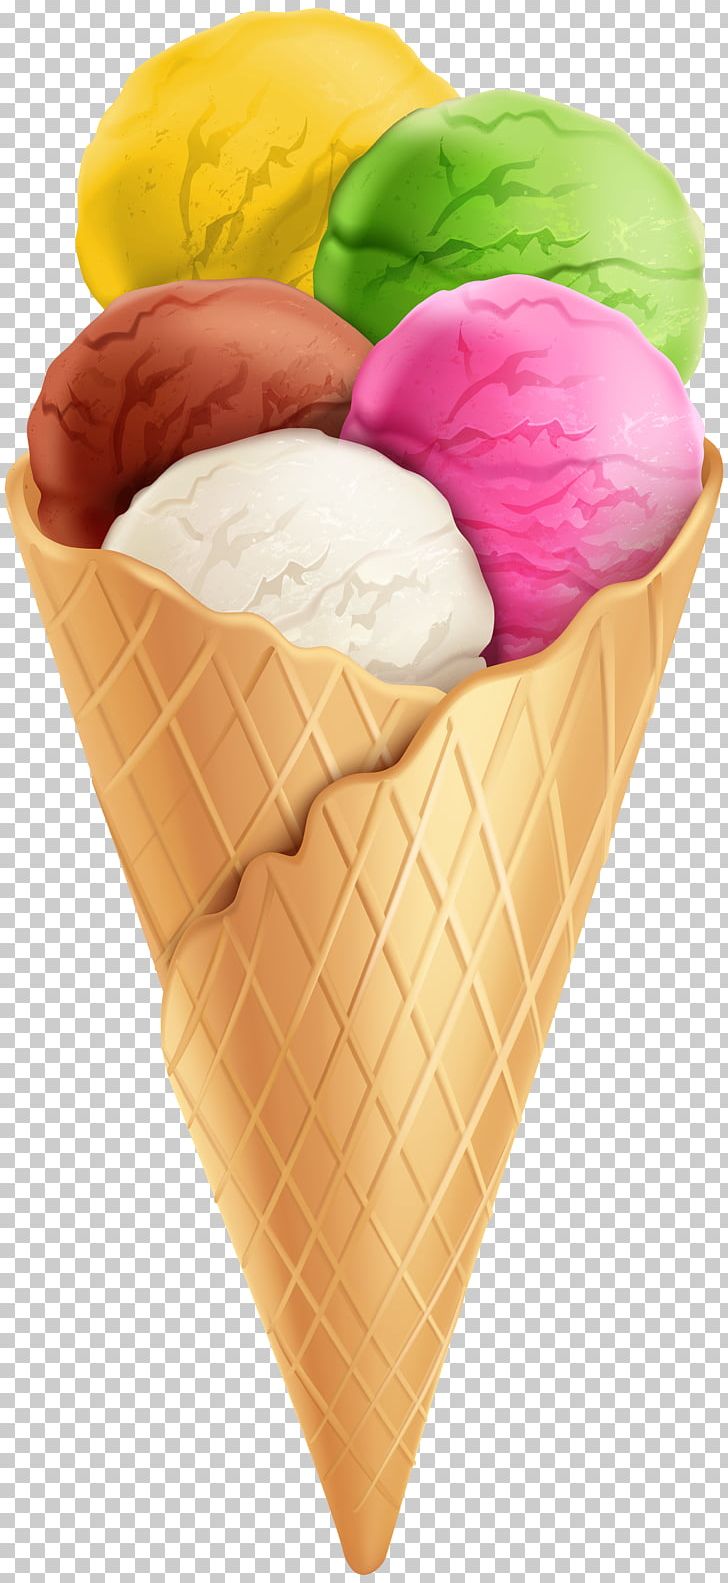 Ice Cream Cone Chocolate Ice Cream Neapolitan Ice Cream PNG, Clipart, Chocolate Ice Cream, Chocolate Ice Cream, Clipart, Clip Art, Cream Free PNG Download